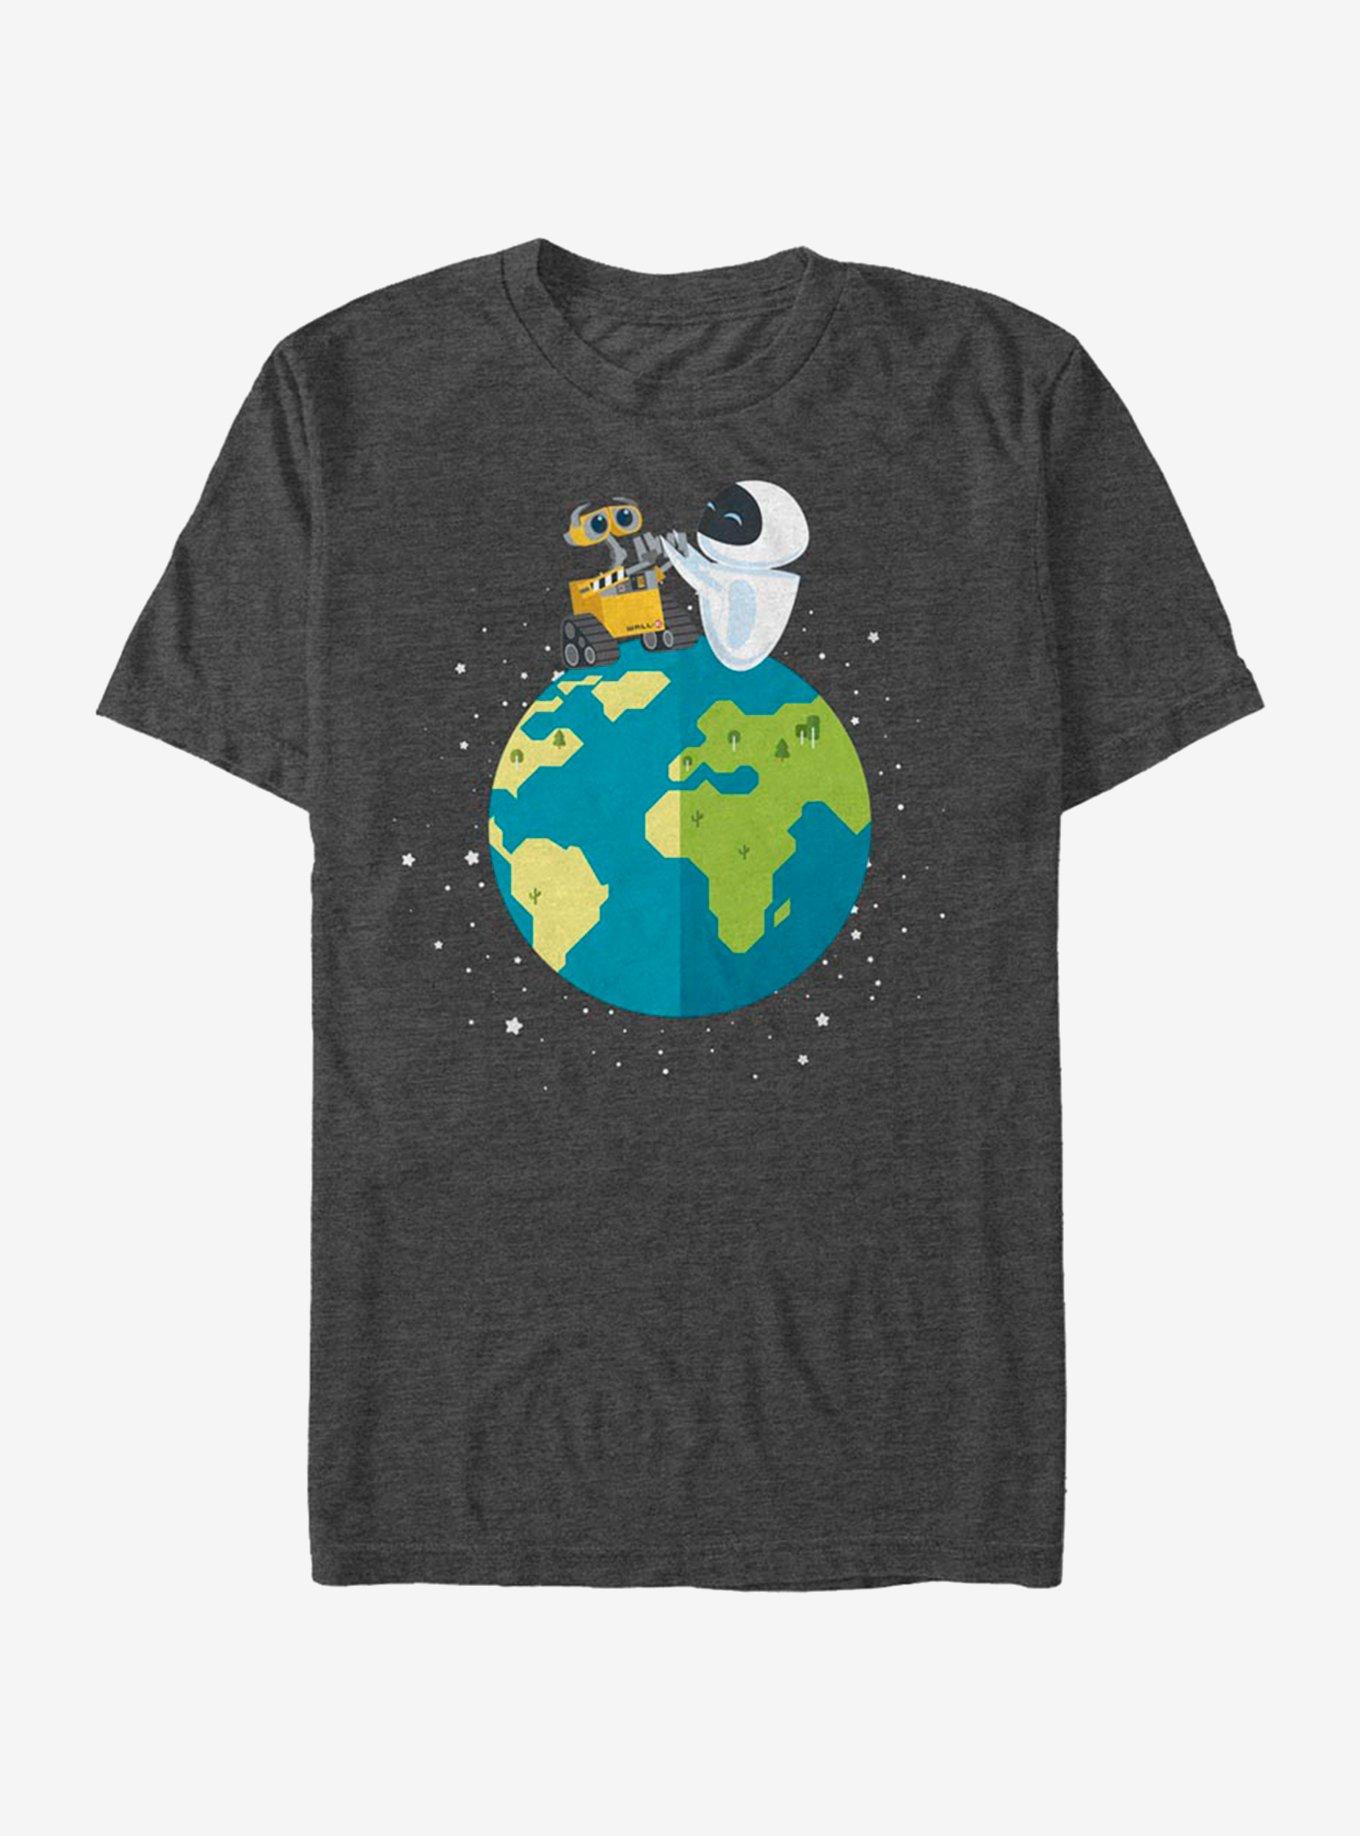 Disney Pixar Wall-E World Peace T-Shirt - GREY | Hot Topic